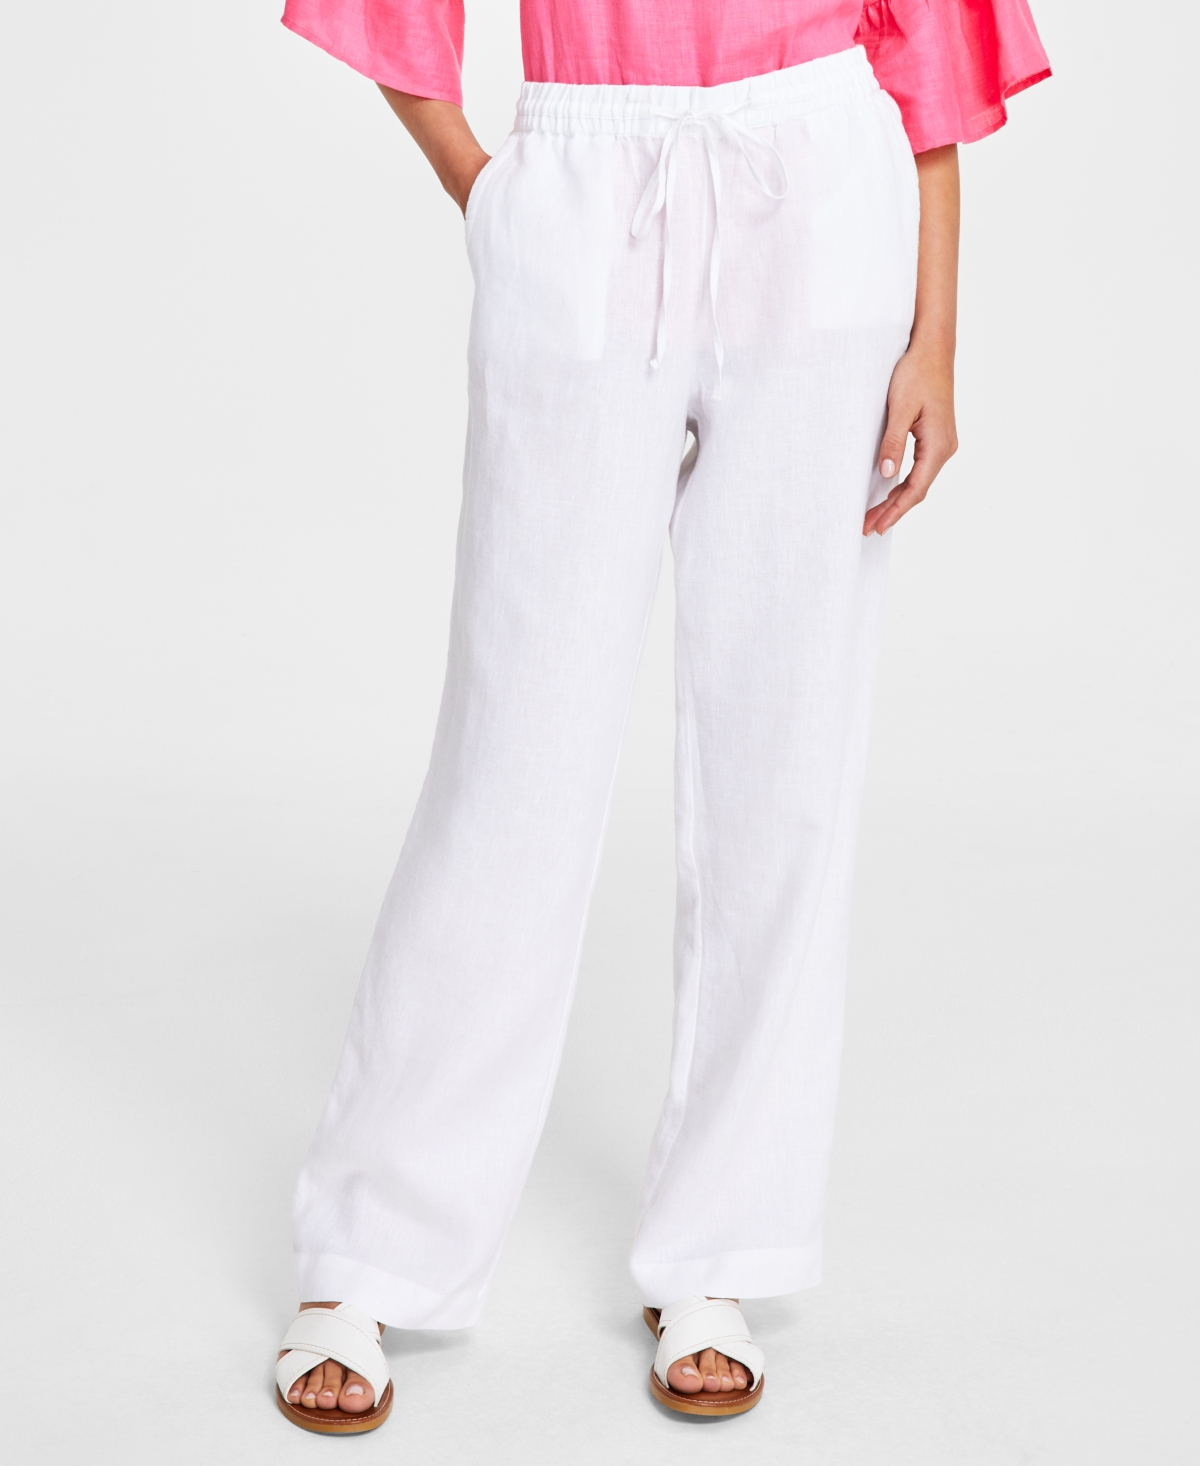 Women's 100% Linen Drawstring Pants, Created for Macy's - Bright White